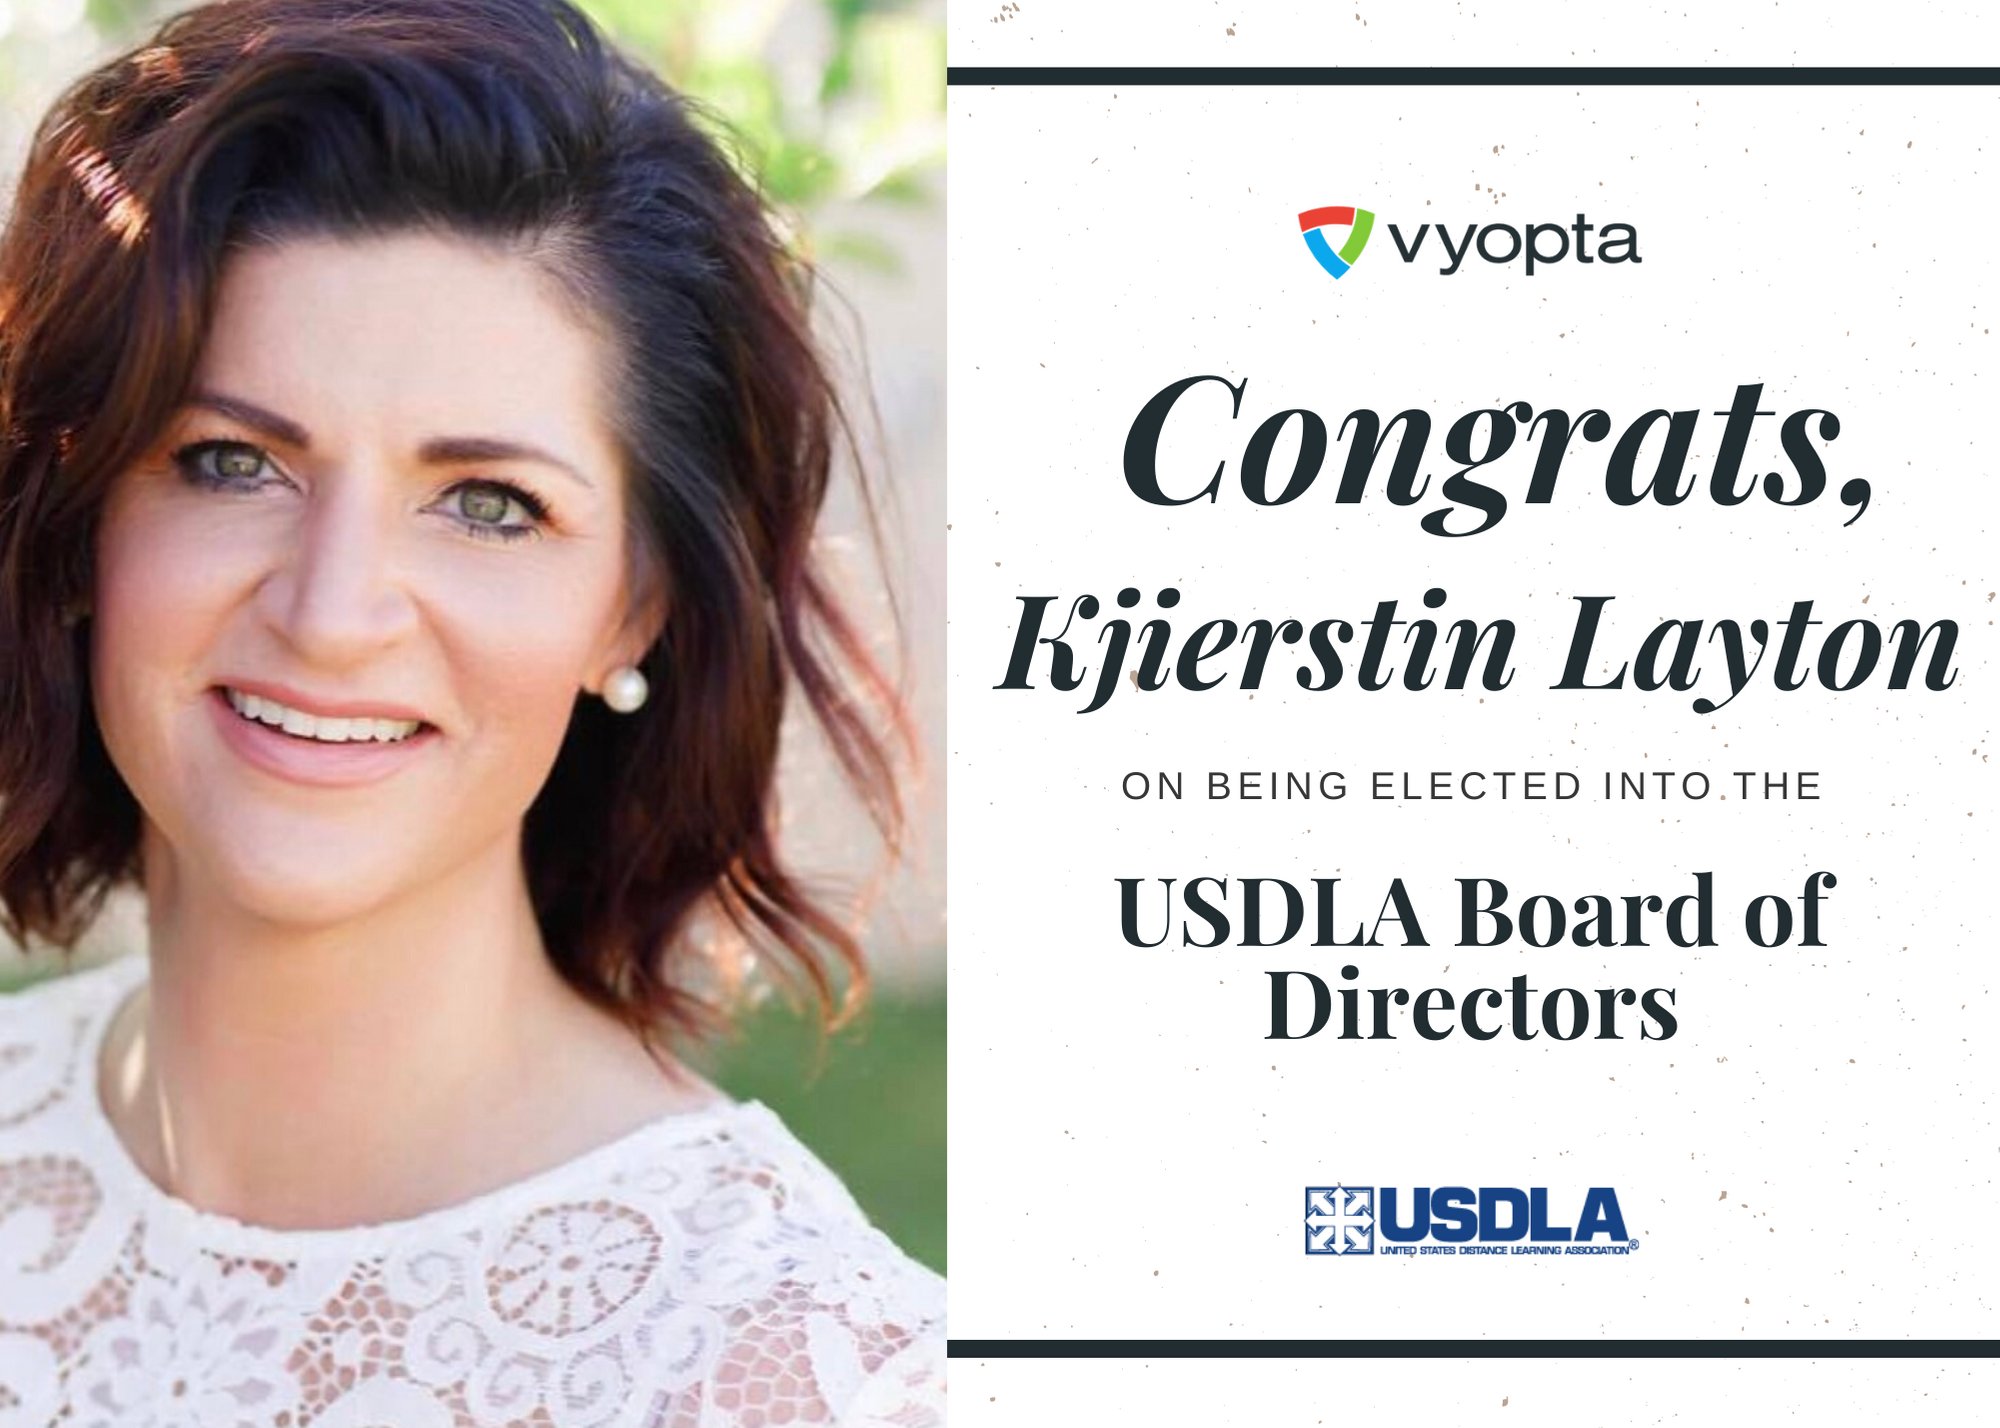 Vyopta’s Kjierstin Layton named to board of the USDLA